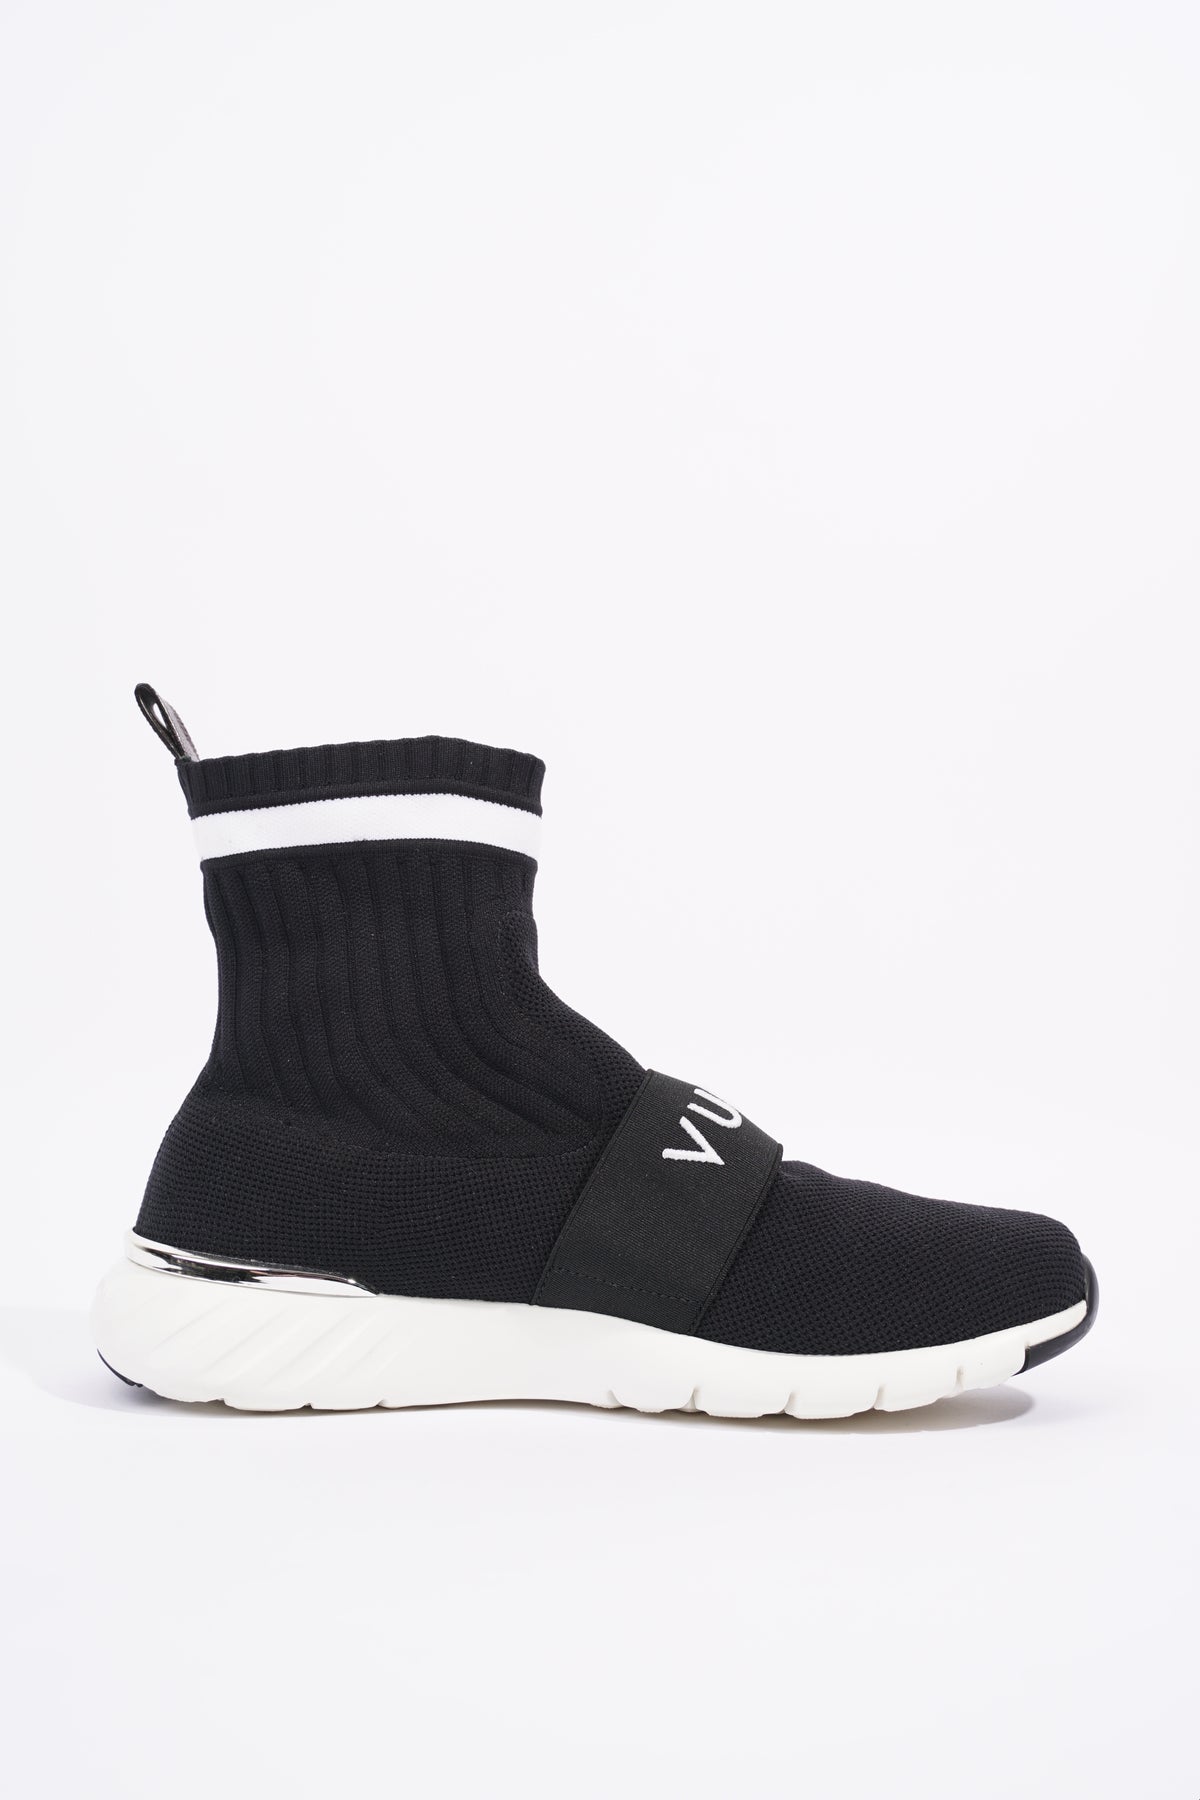 Louis Vuitton Womens Aftergame Sock Sneaker Black / White EU 38